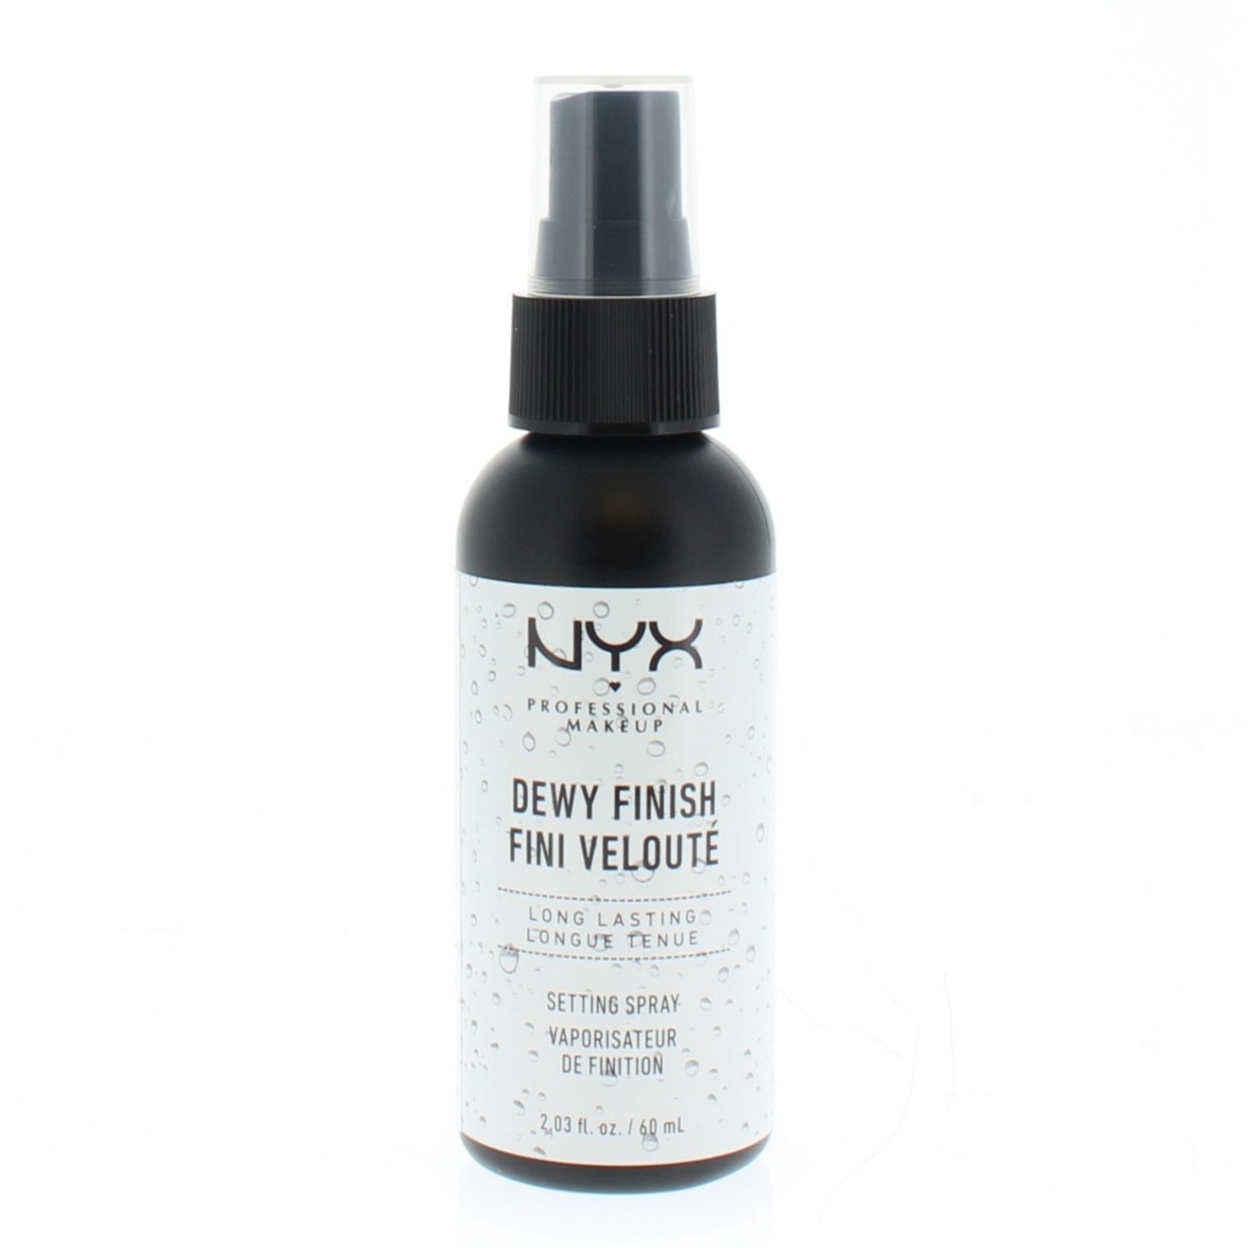 NYX Professional Makeup Dewy Finish Makeup Setting Spray 2.03oz/60ml